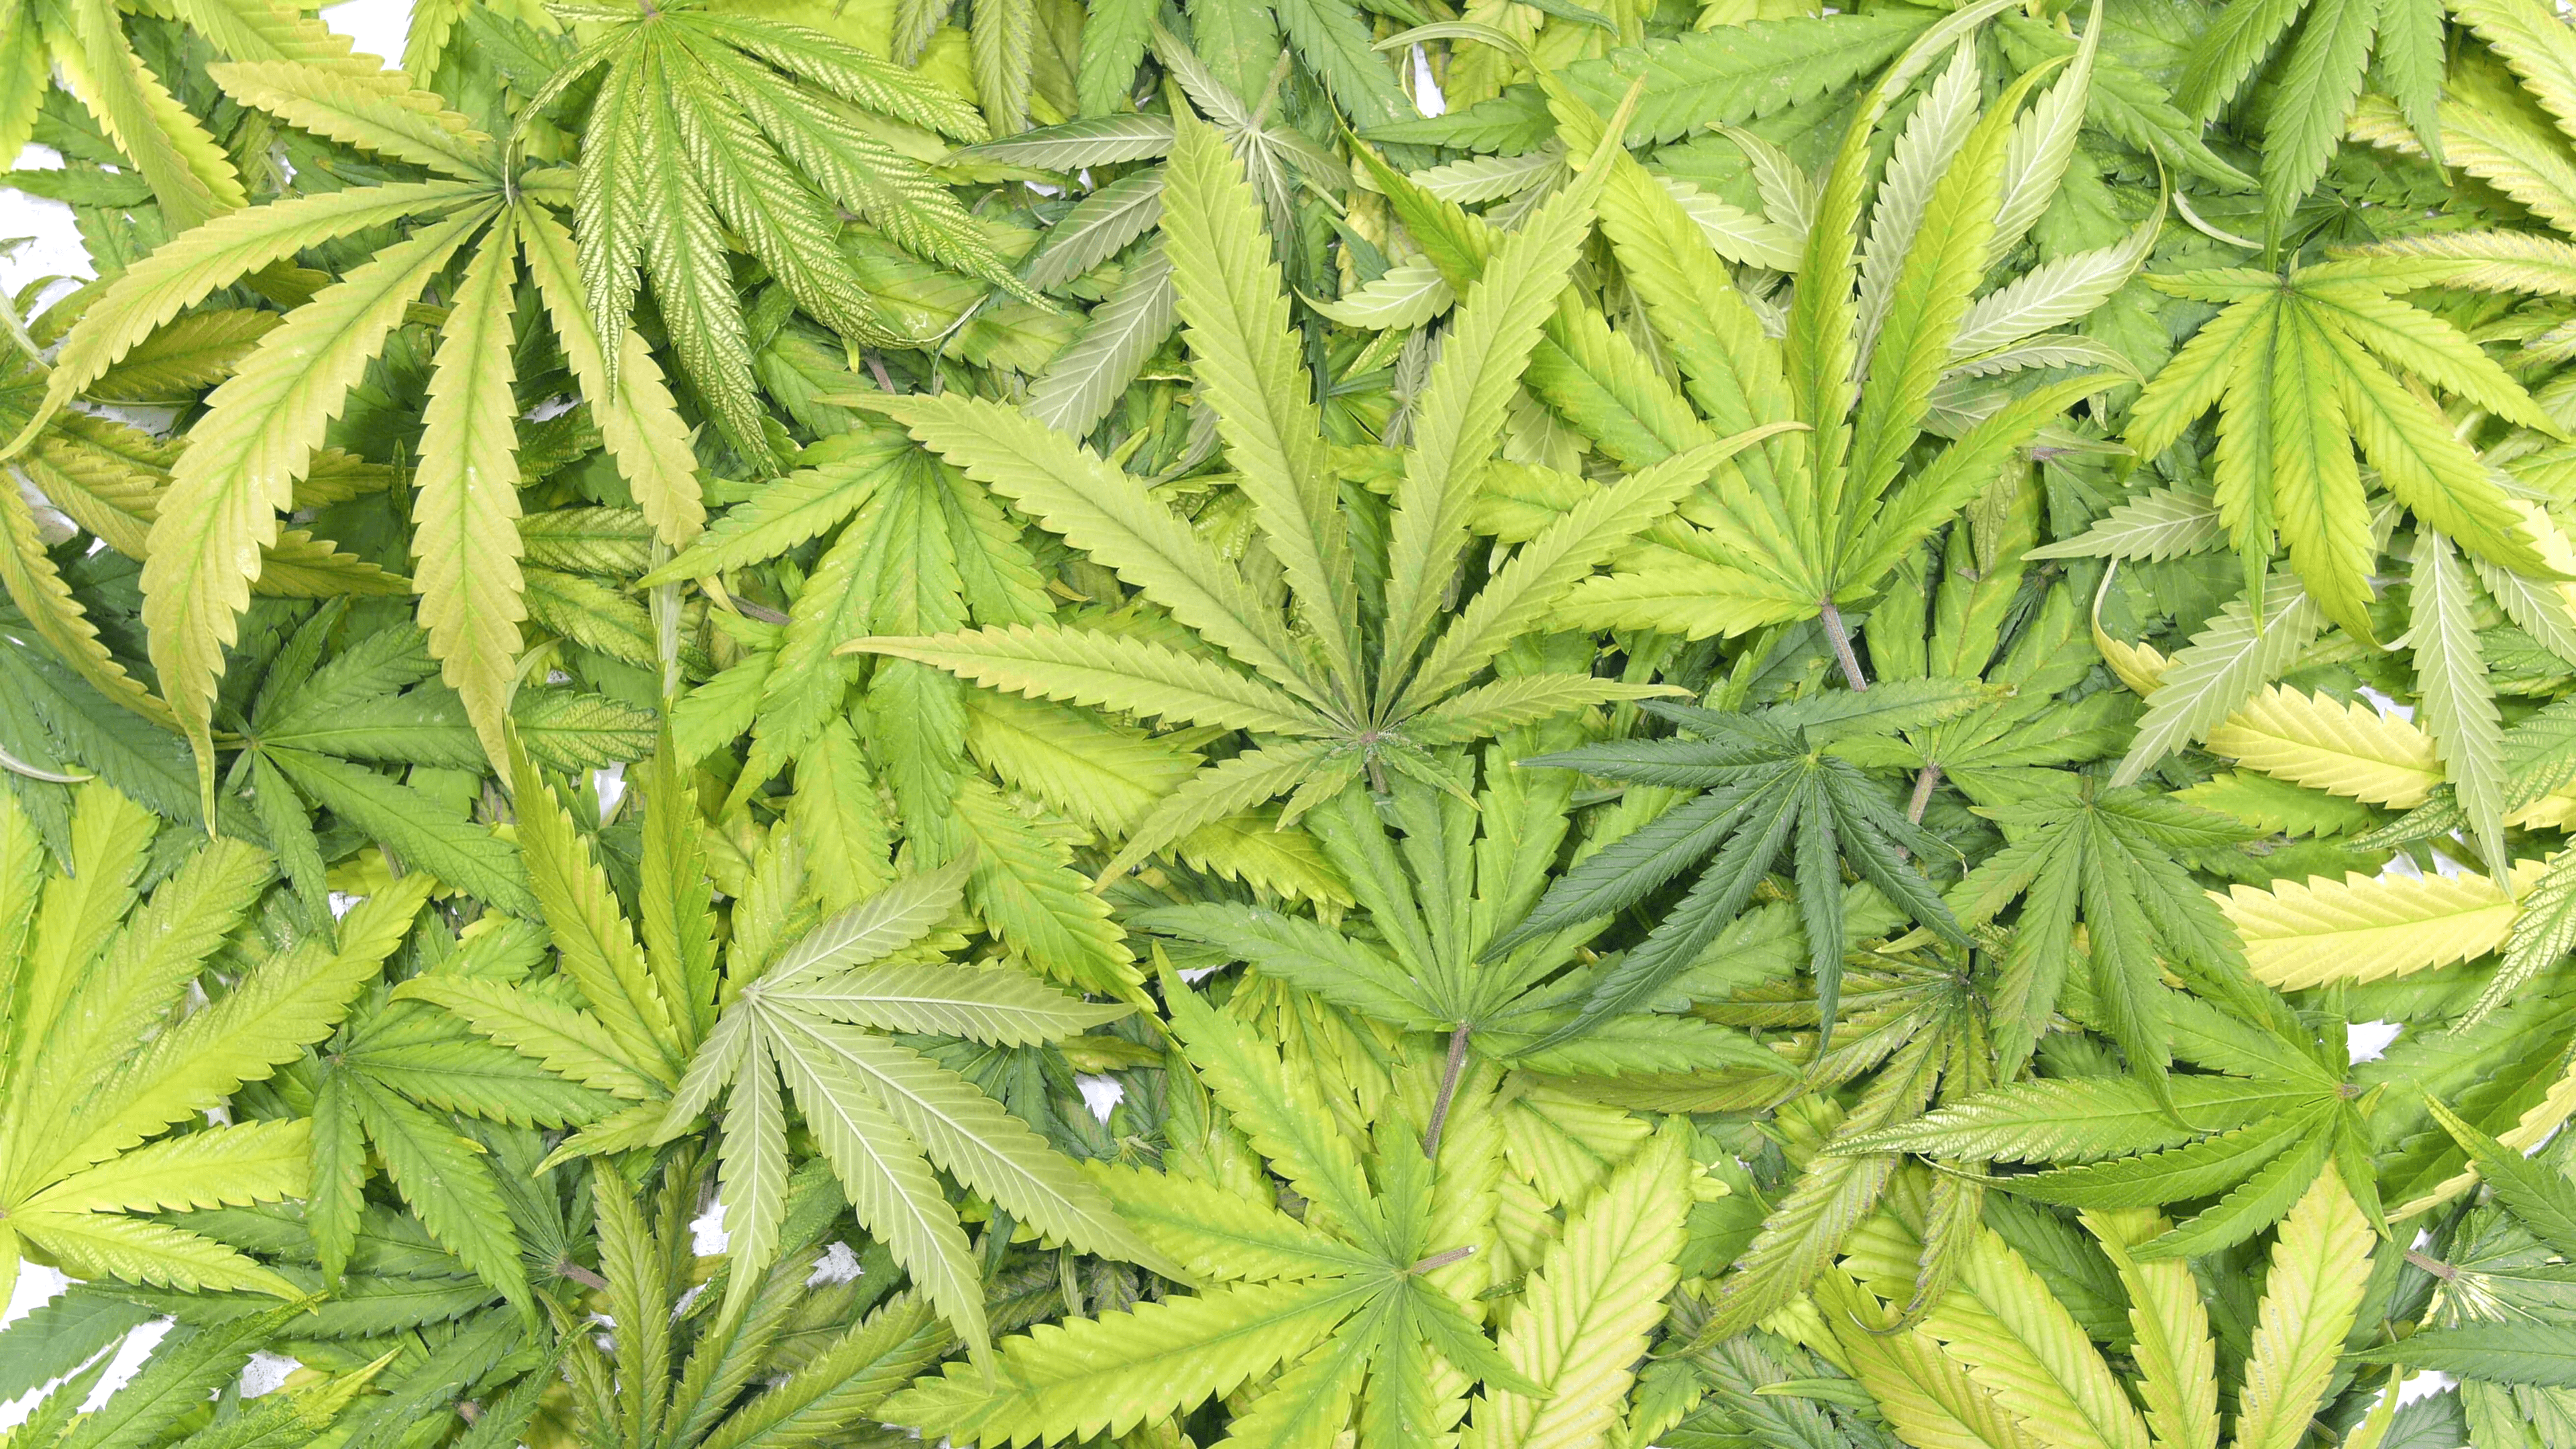 Background Texture of Marijuana Leaf Pile with Single Leaf Falling